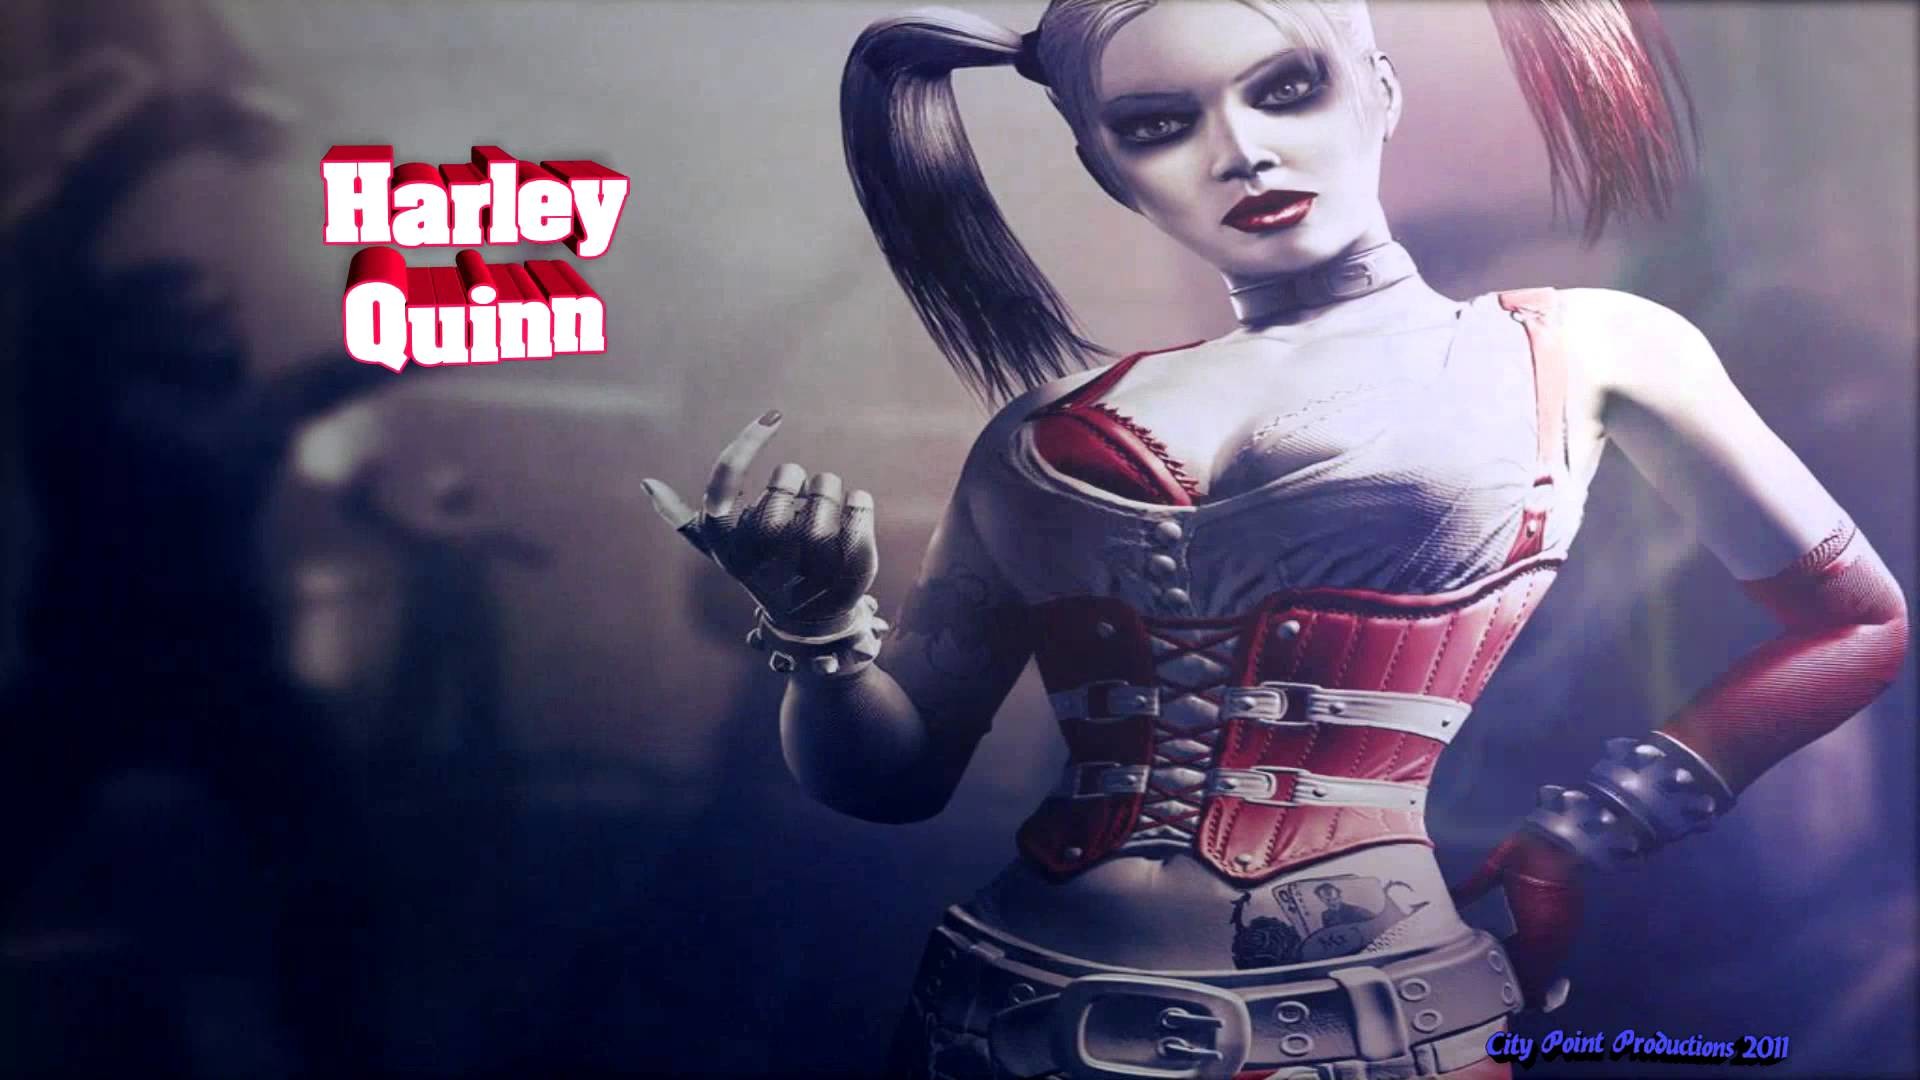 harley quinn live wallpaper,harley quinn,fictional character,supervillain,superhero,album cover